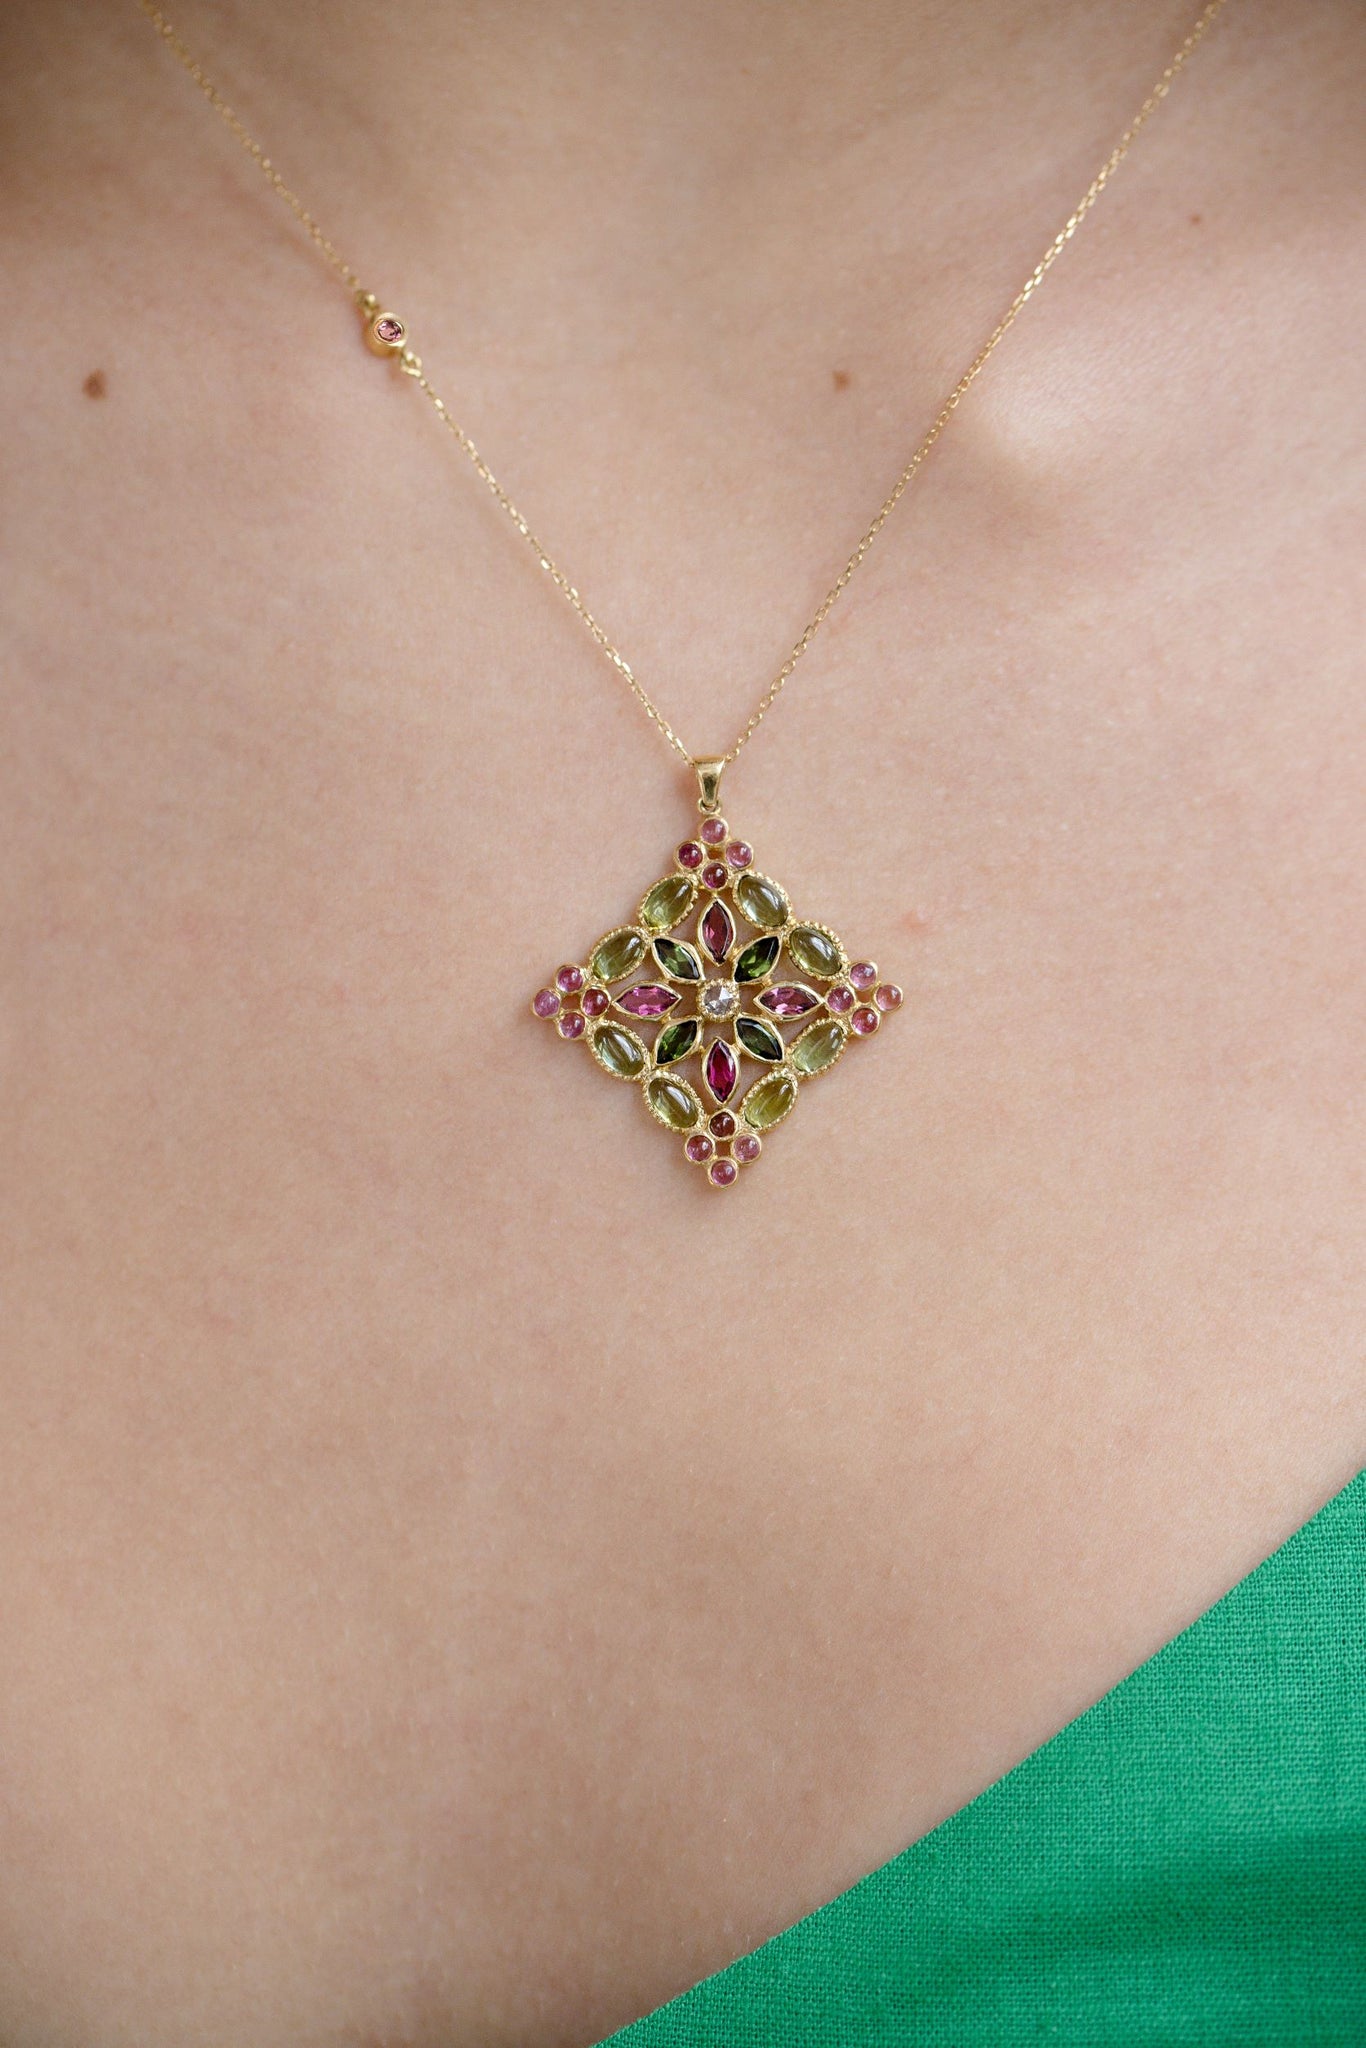 Arabesque Necklace with Multicolored Tourmalines, Diamond Center